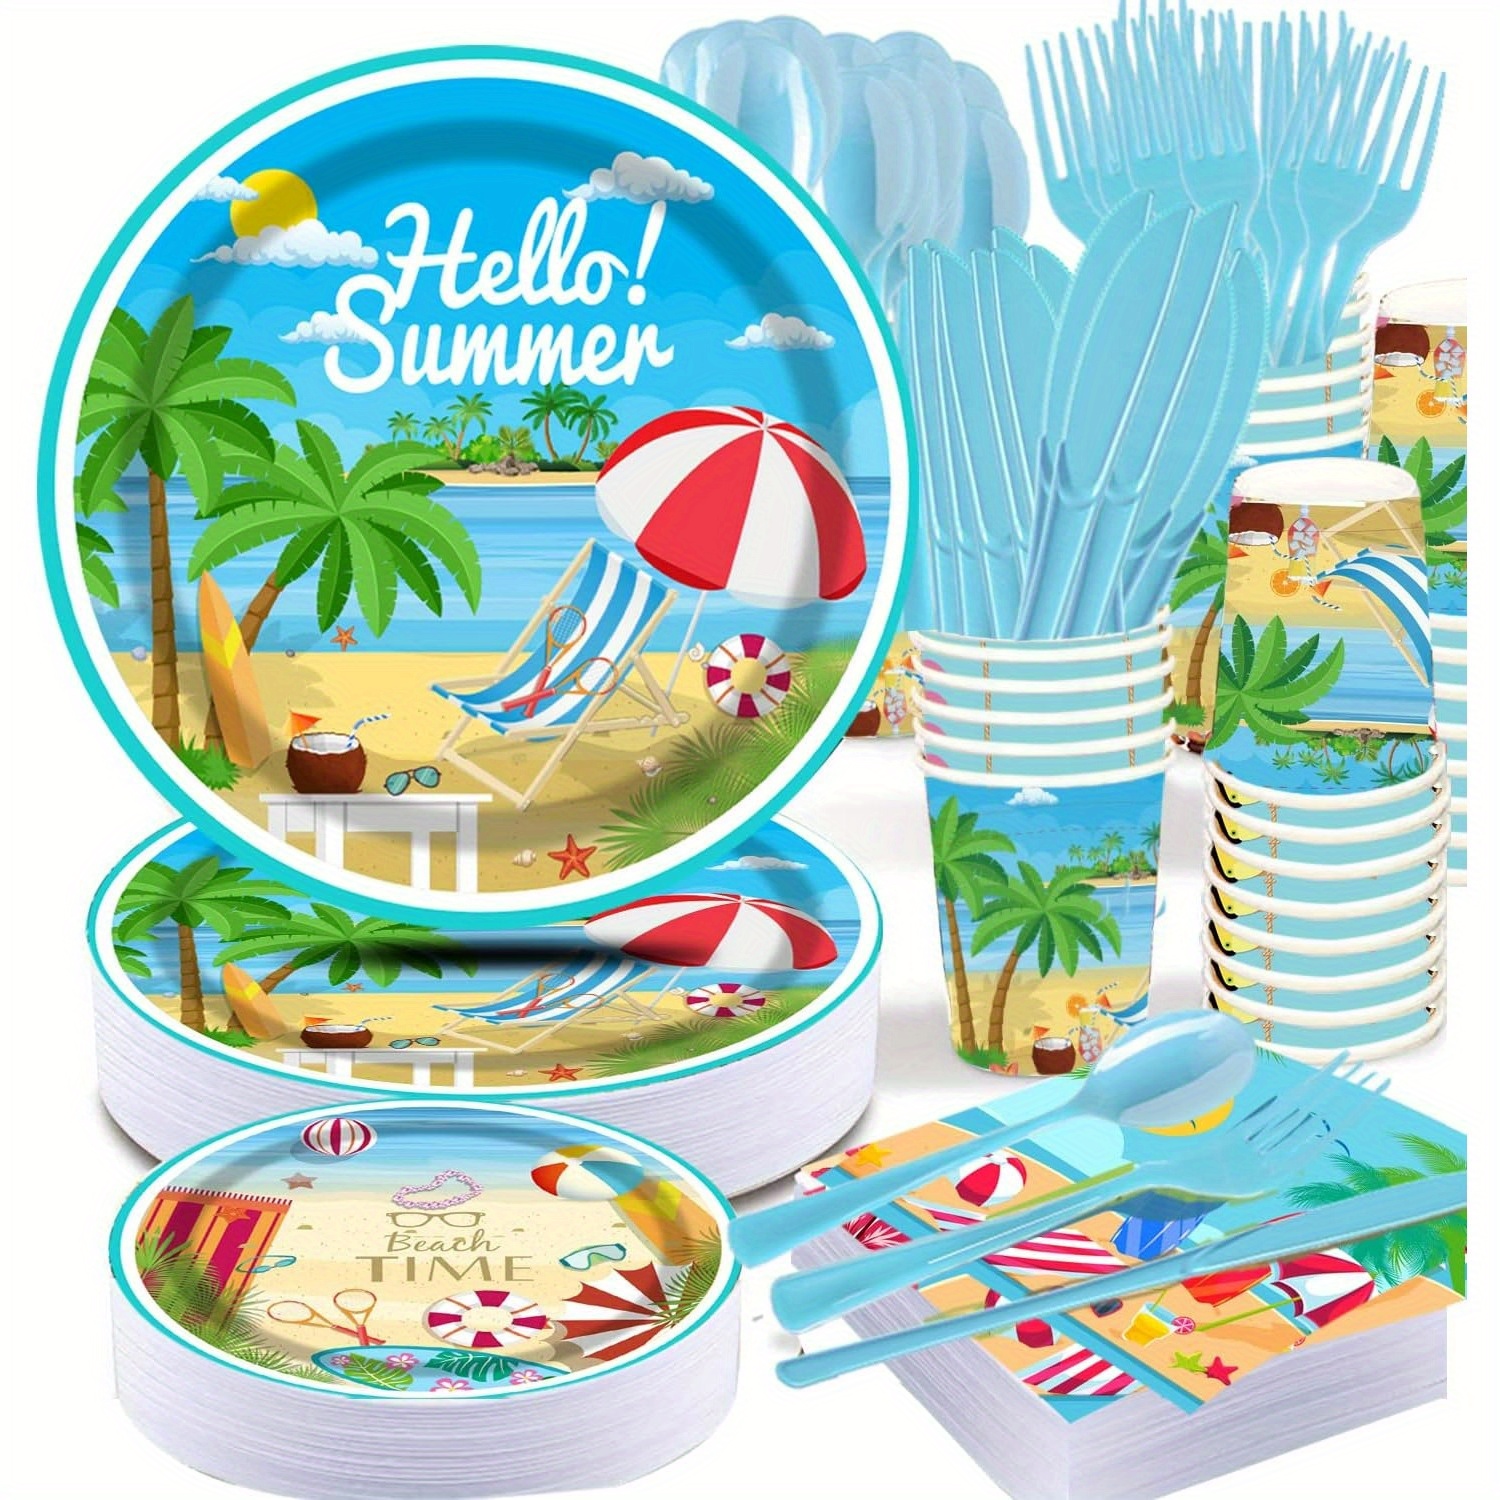 2 Pieces Palm Tree Beach Theme Party Decor Ice Bucket Decorate Decorations  Pvc Pool